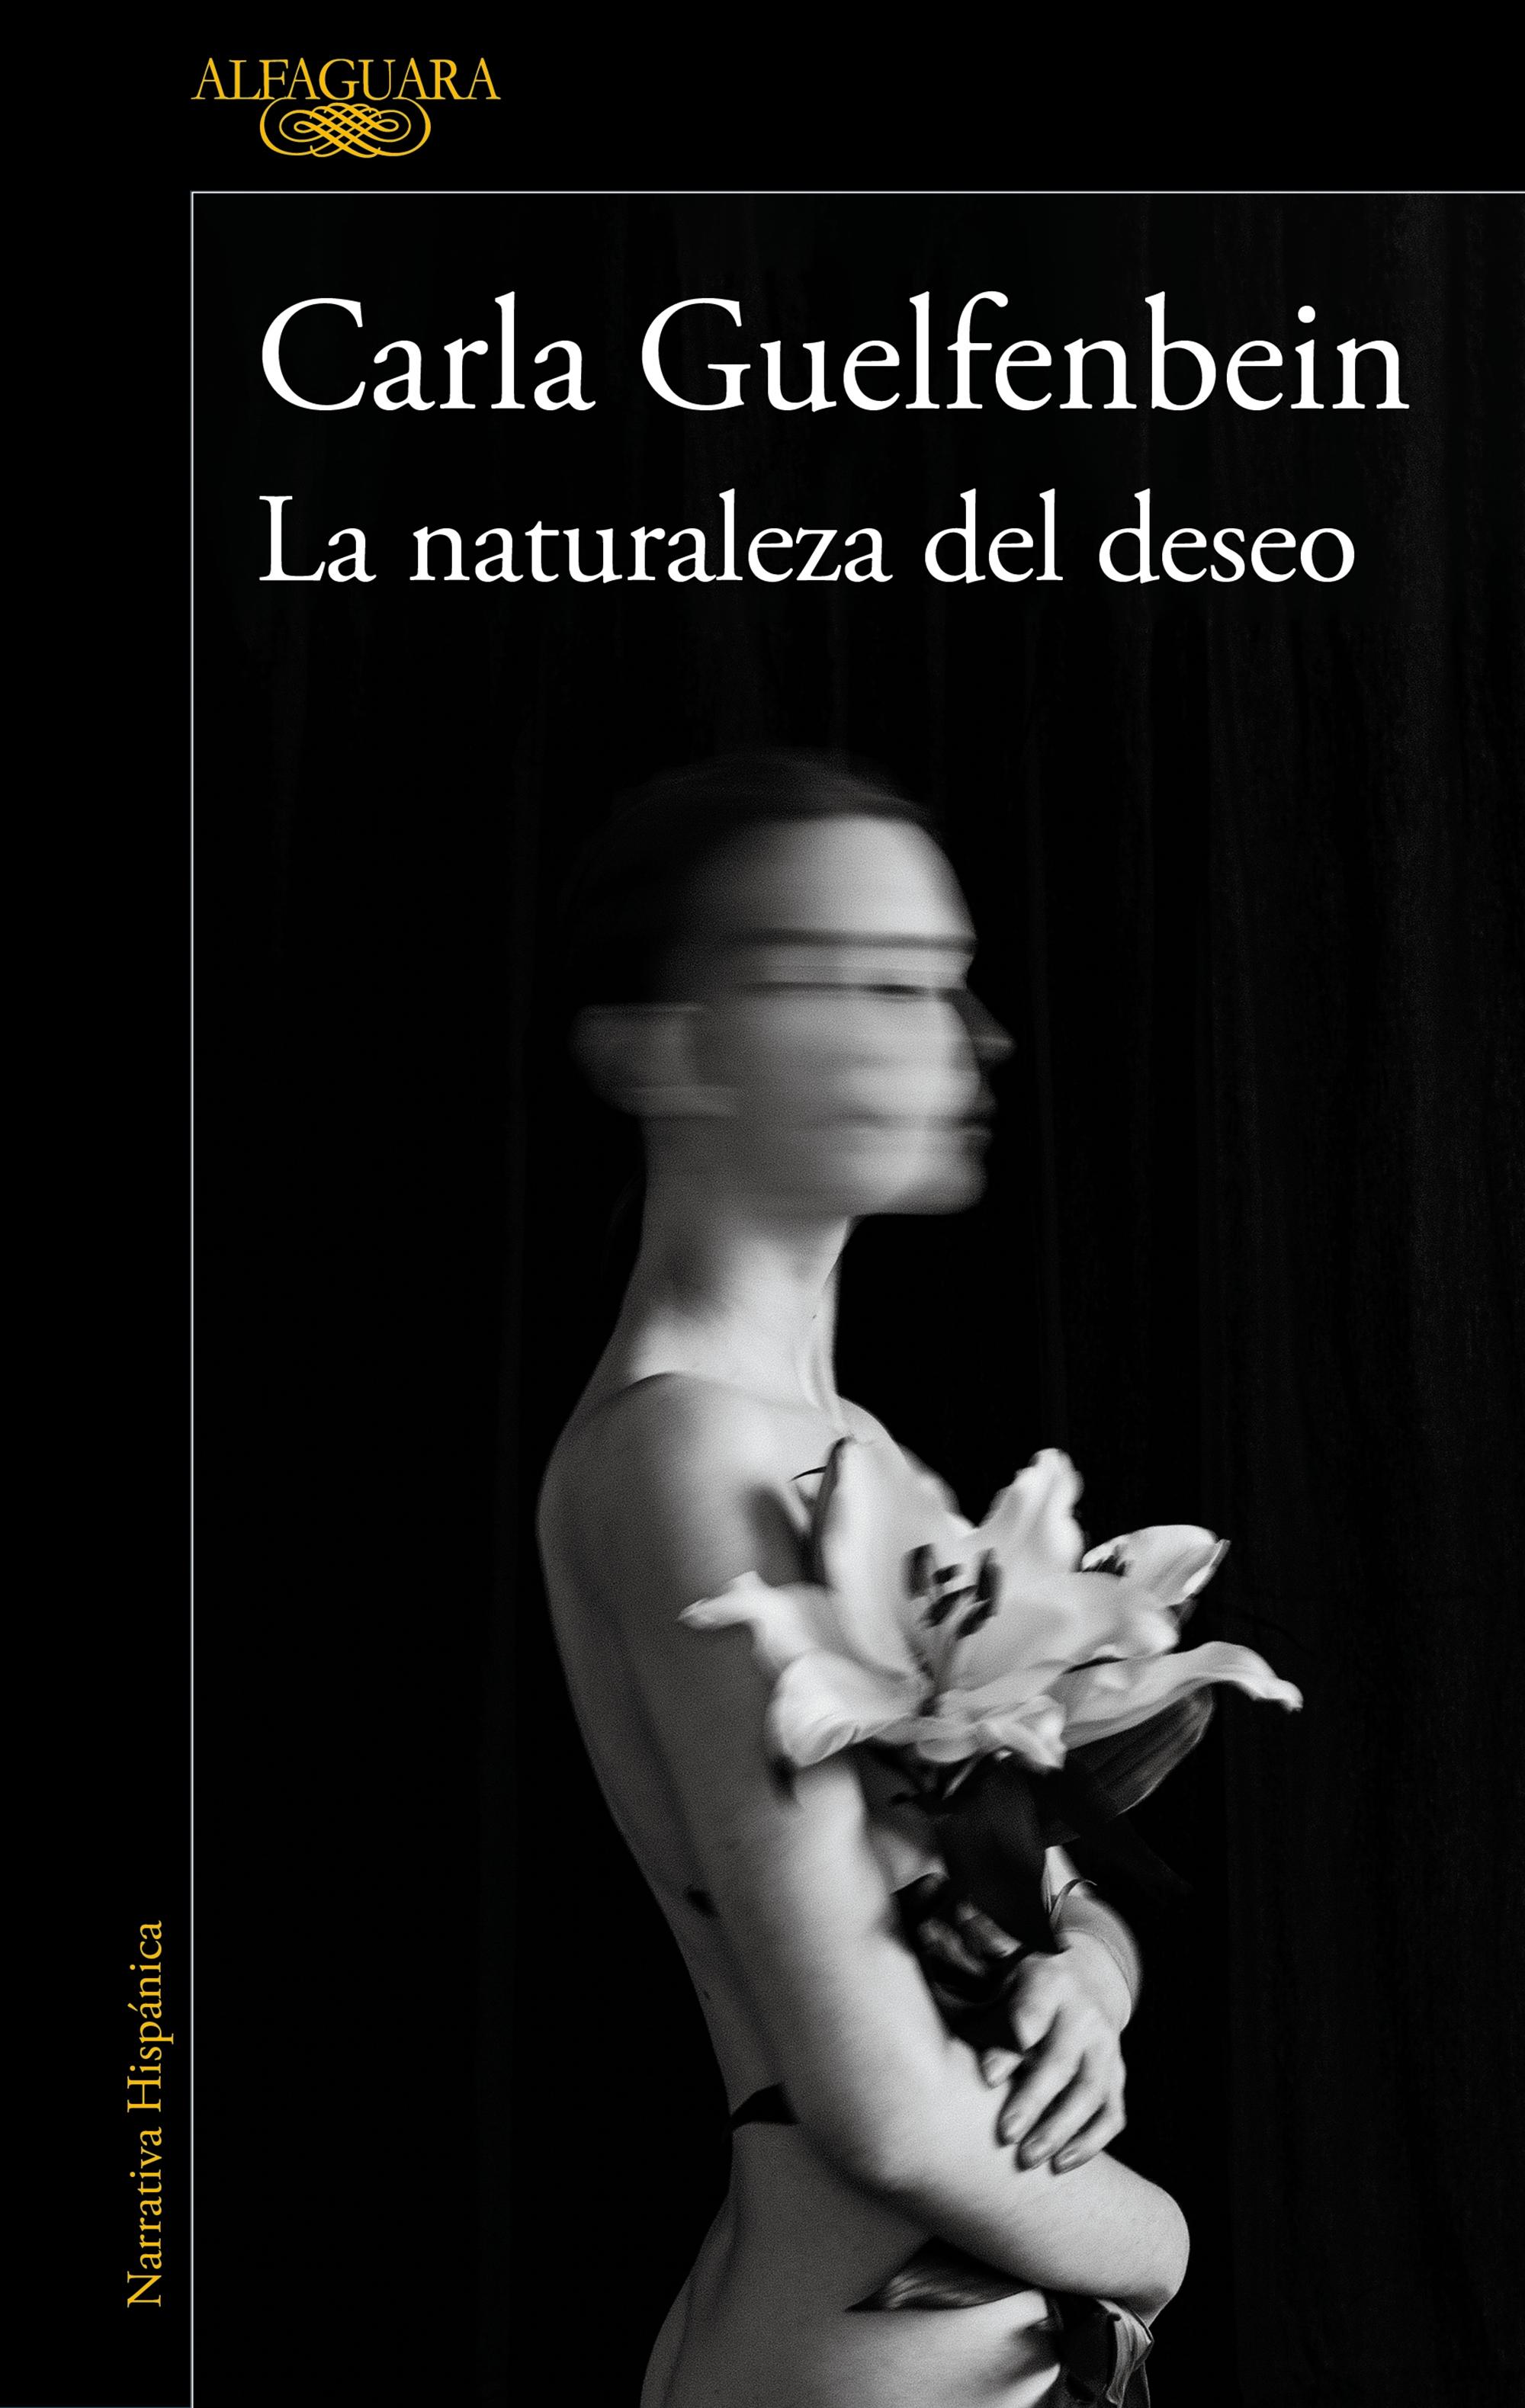 La Naturaleza del Deseo "La Nueva Novela de la Autora Ganadora del Premio Alfaguara". 